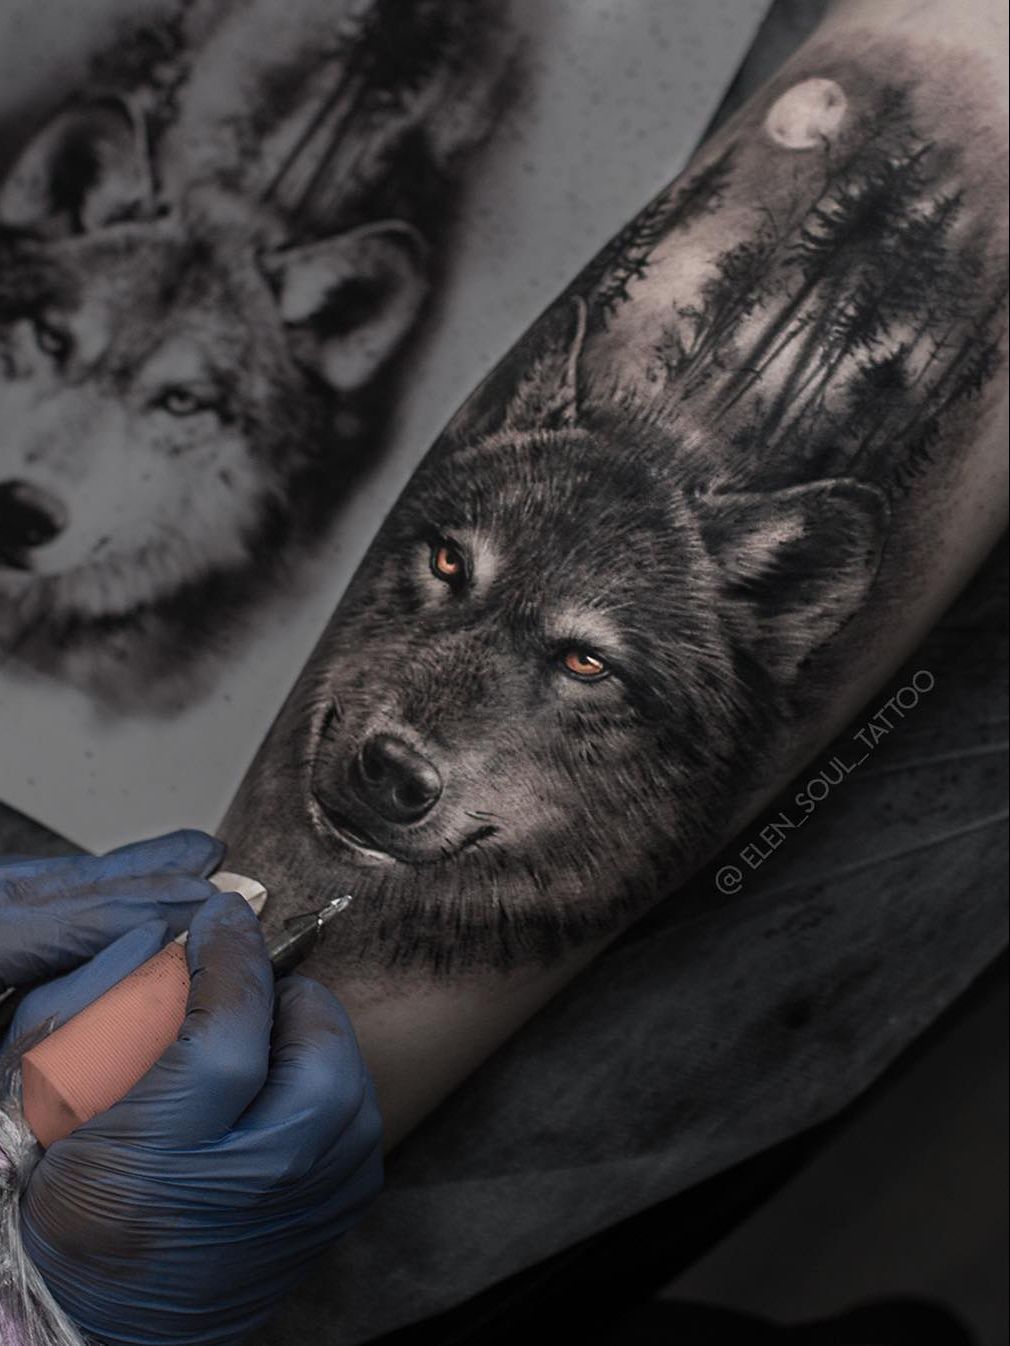 Sang Royal Tattoos - Small Wolf portrait done by @federicosangroyaltattoos  #blackwork #wolftattoo #wolf #wolfportrait | Facebook